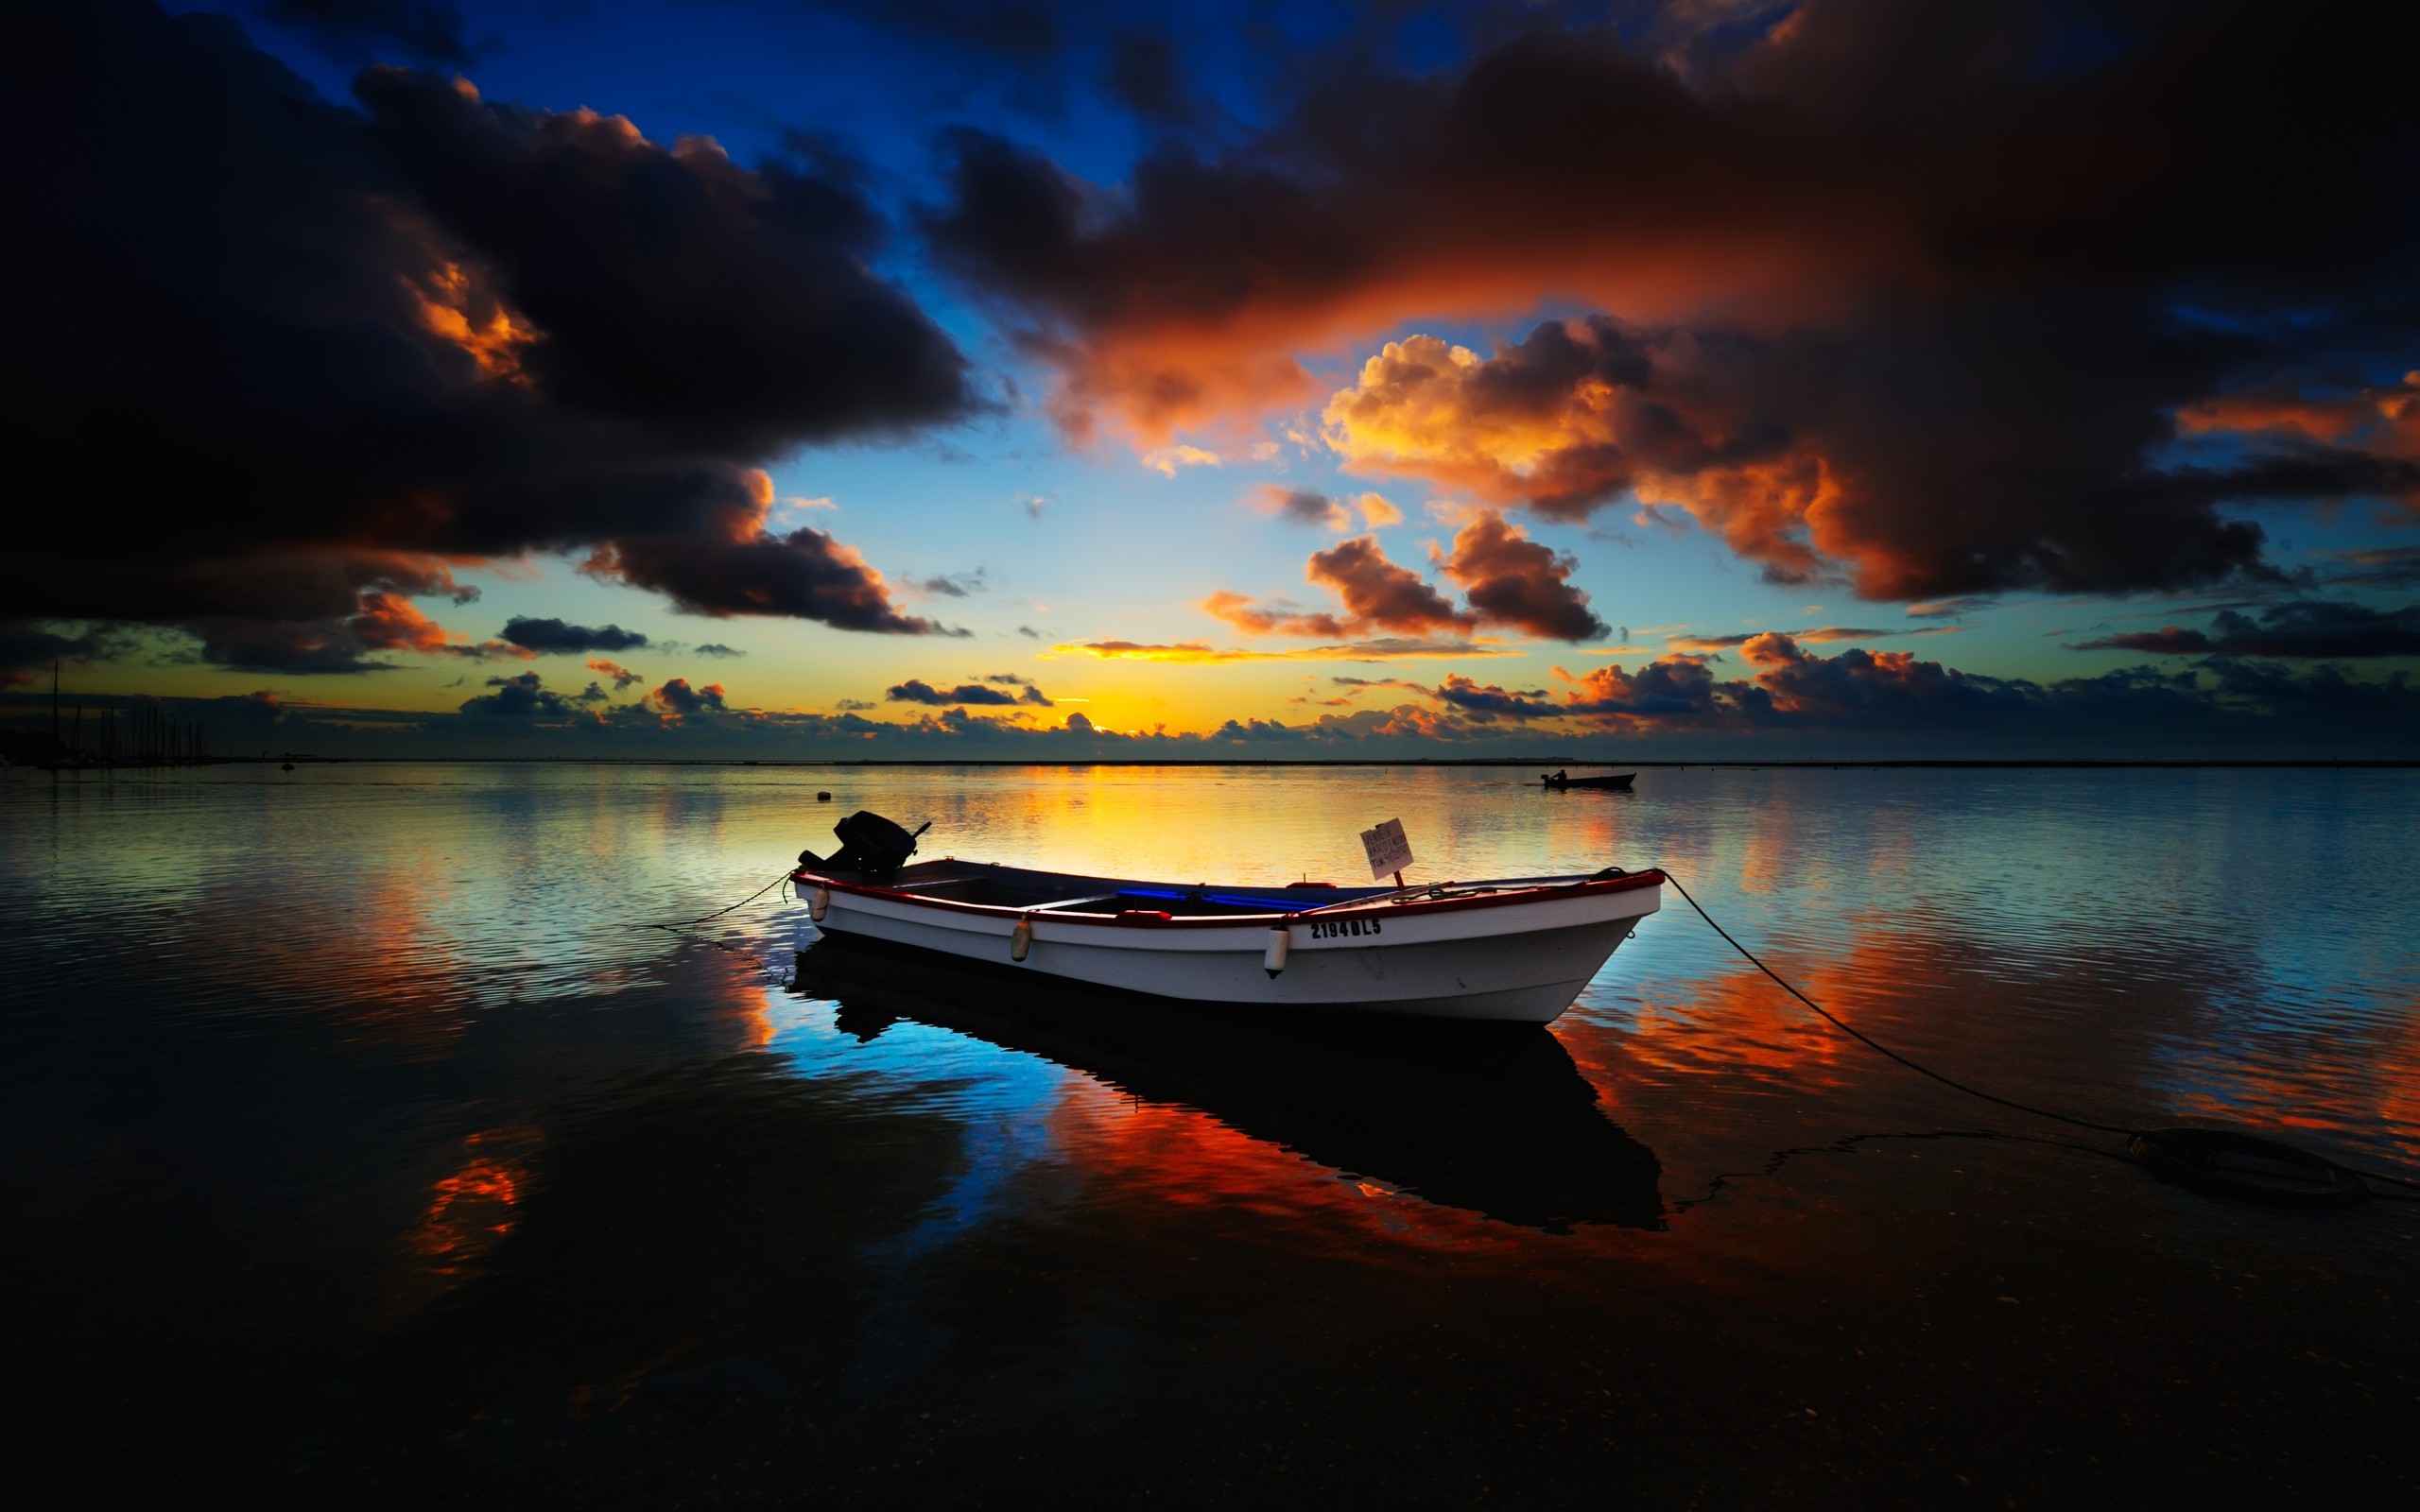 General 2560x1600 landscape nature boat sunset calm clouds horizon sky reflection orange water vehicle